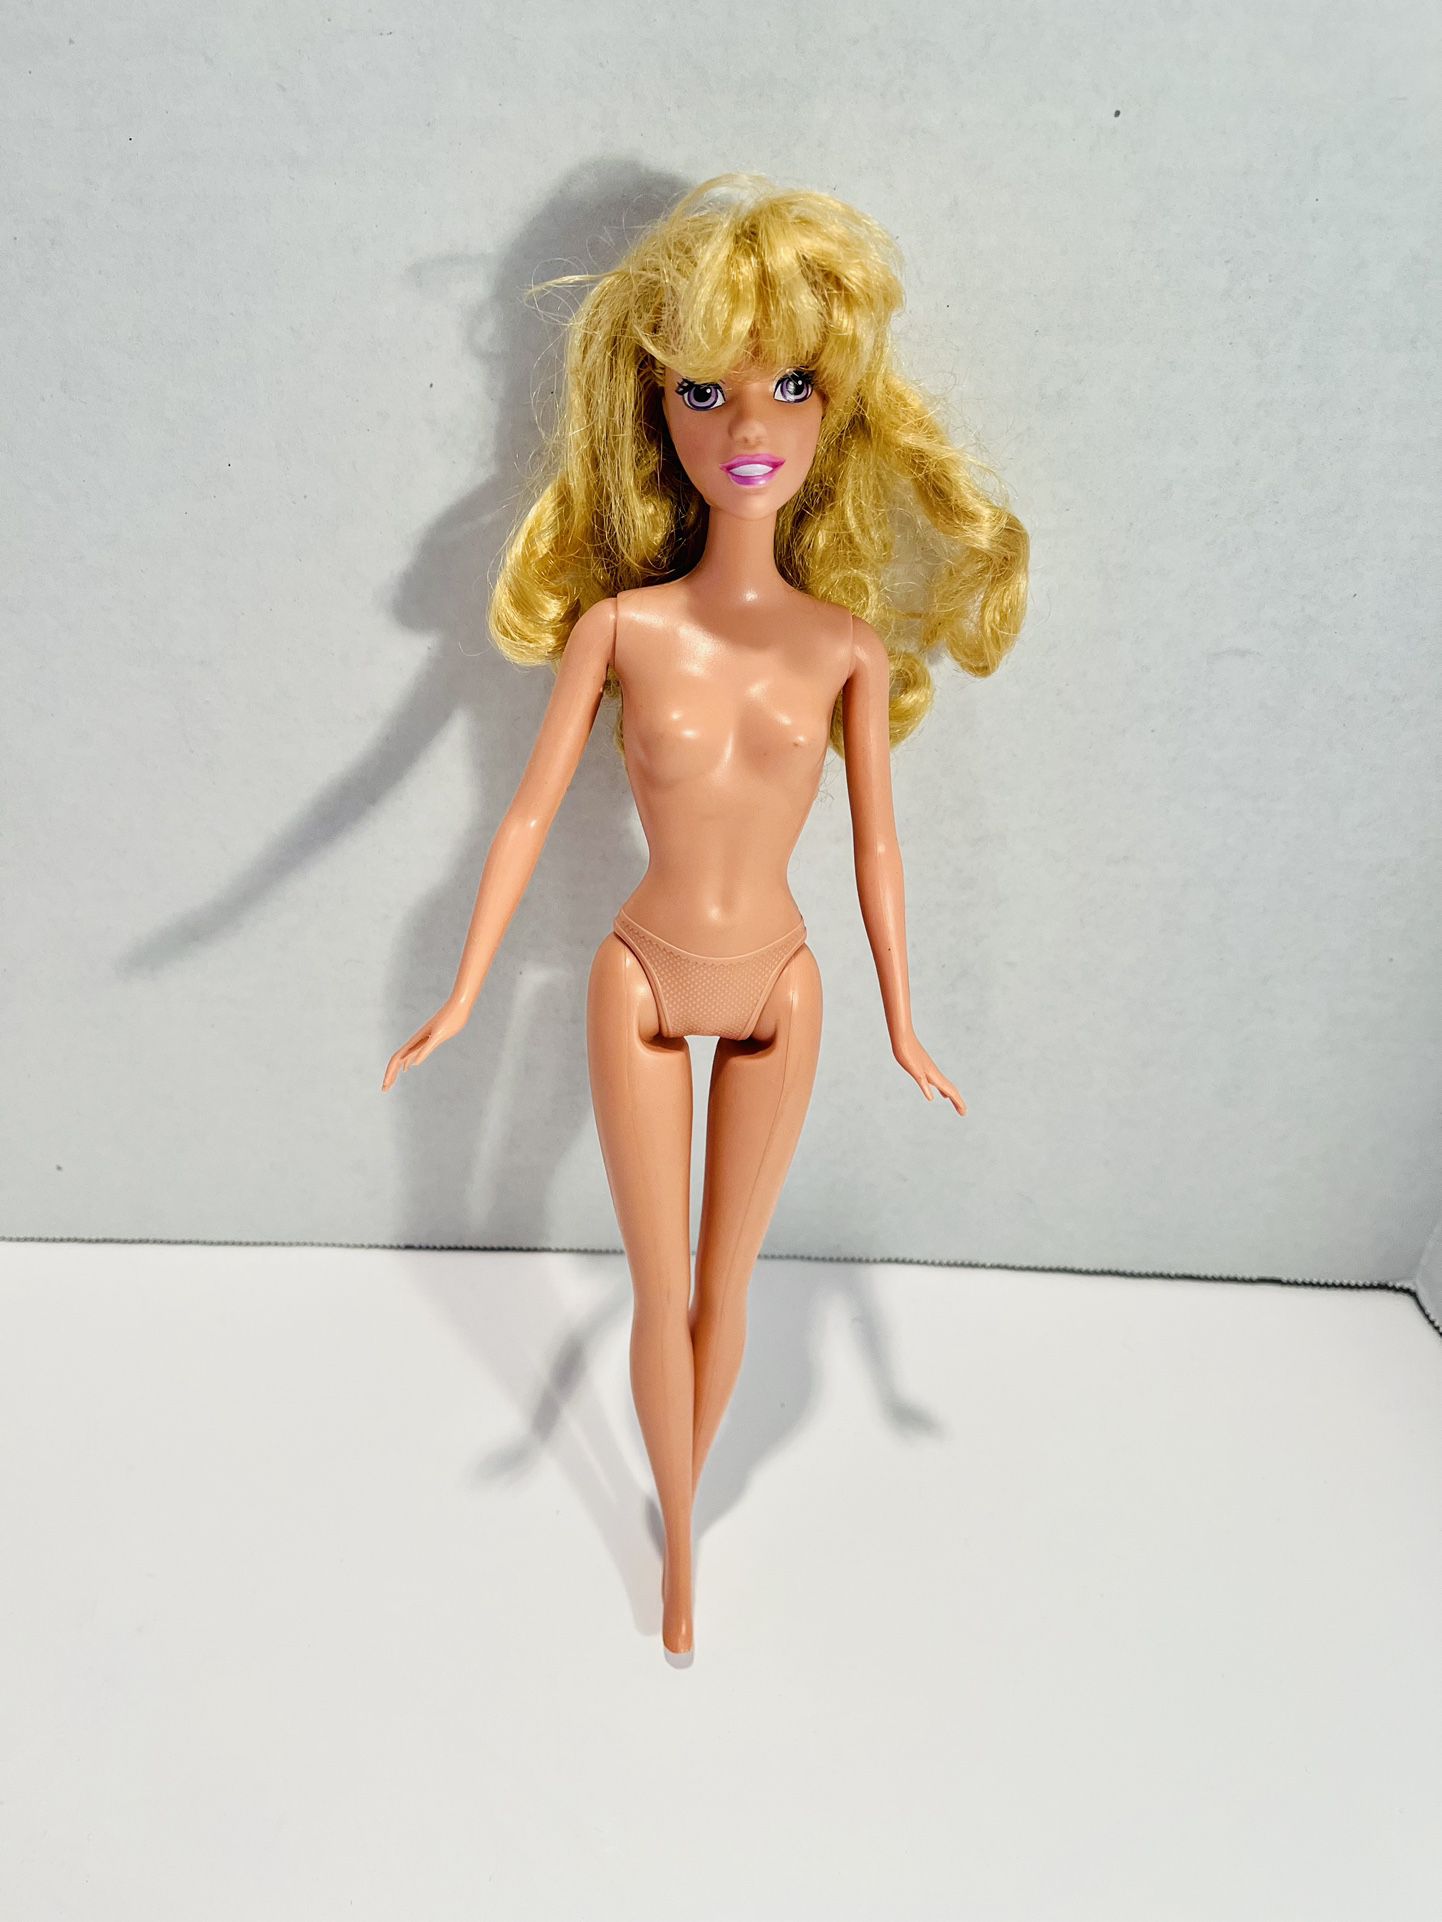 Barbie Doll DISNEY PRINCESS AURORA Sleeping Beauty Nude for Sale in NV - OfferUp